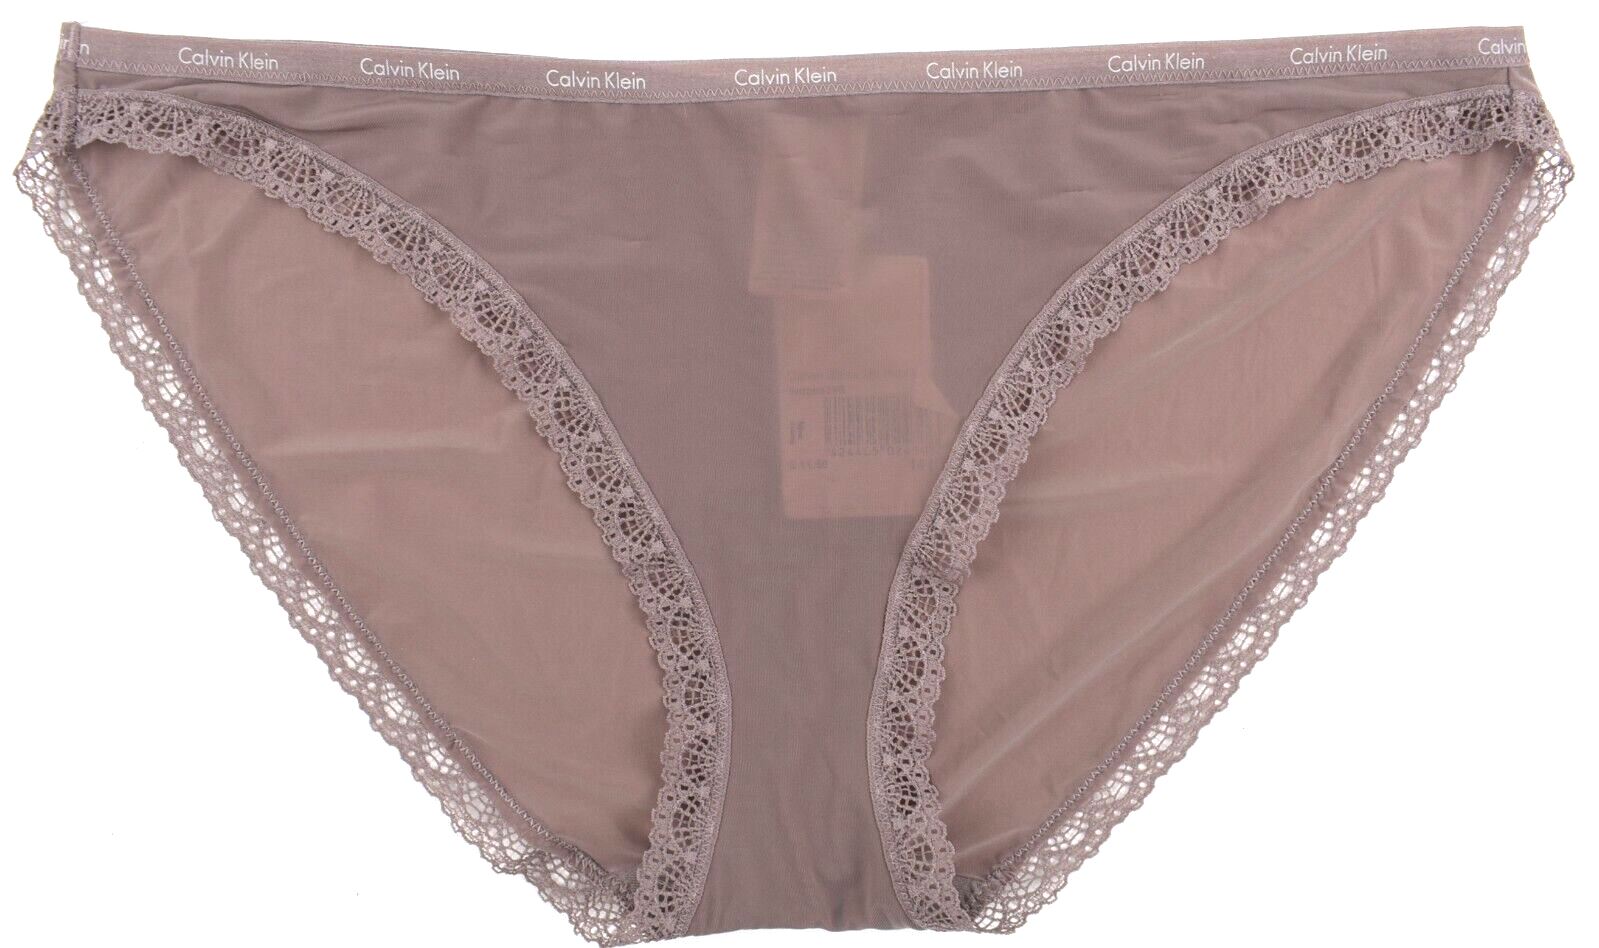 CALVIN KLEIN Underwear Womens Bikini Knickers, Colour: Smoke, size L /UK 14